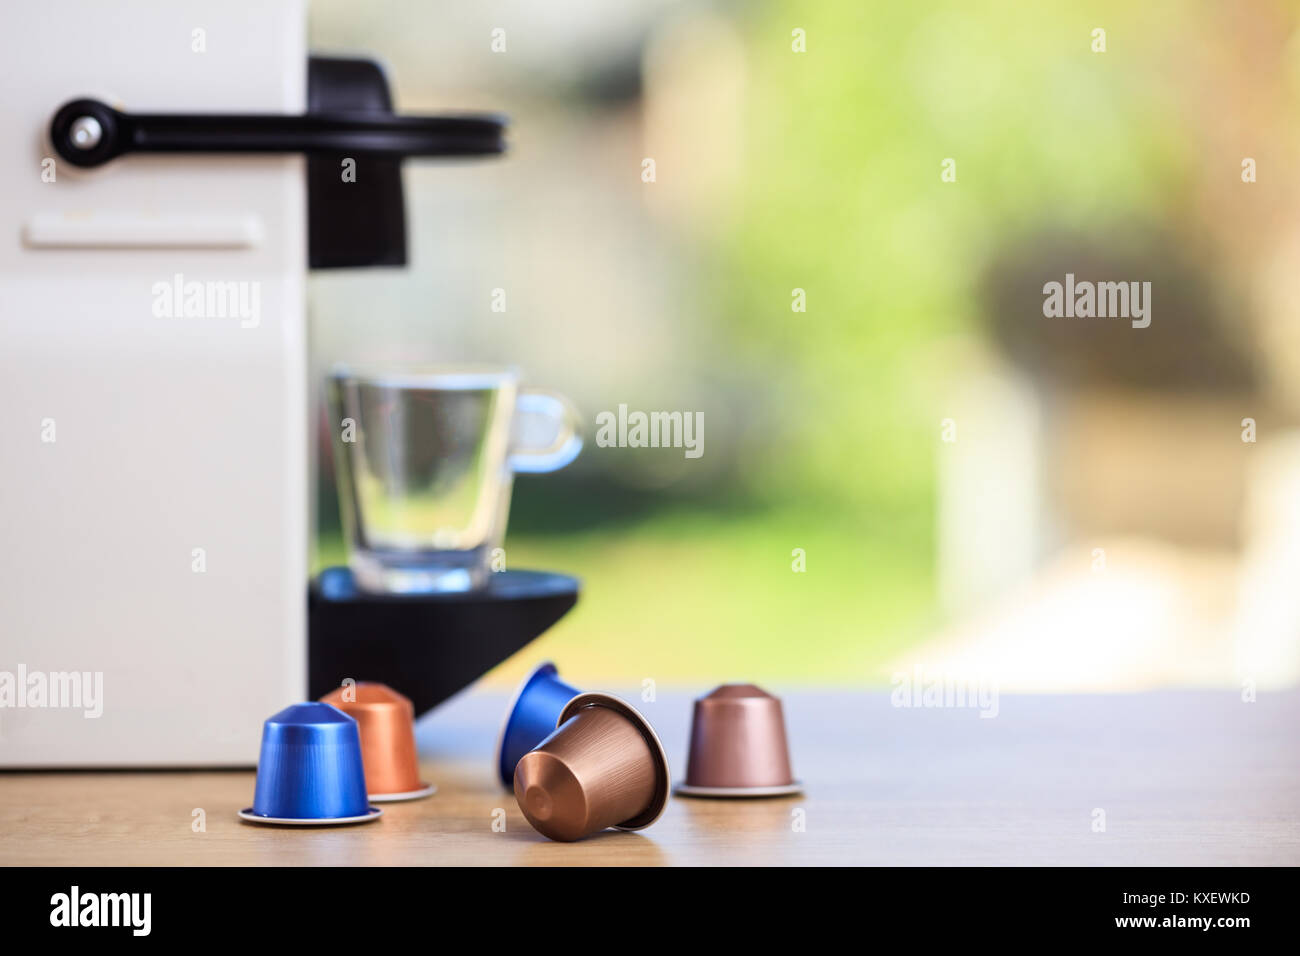 Espresso Capsules On Blur Espresso Maker Background Closeup View